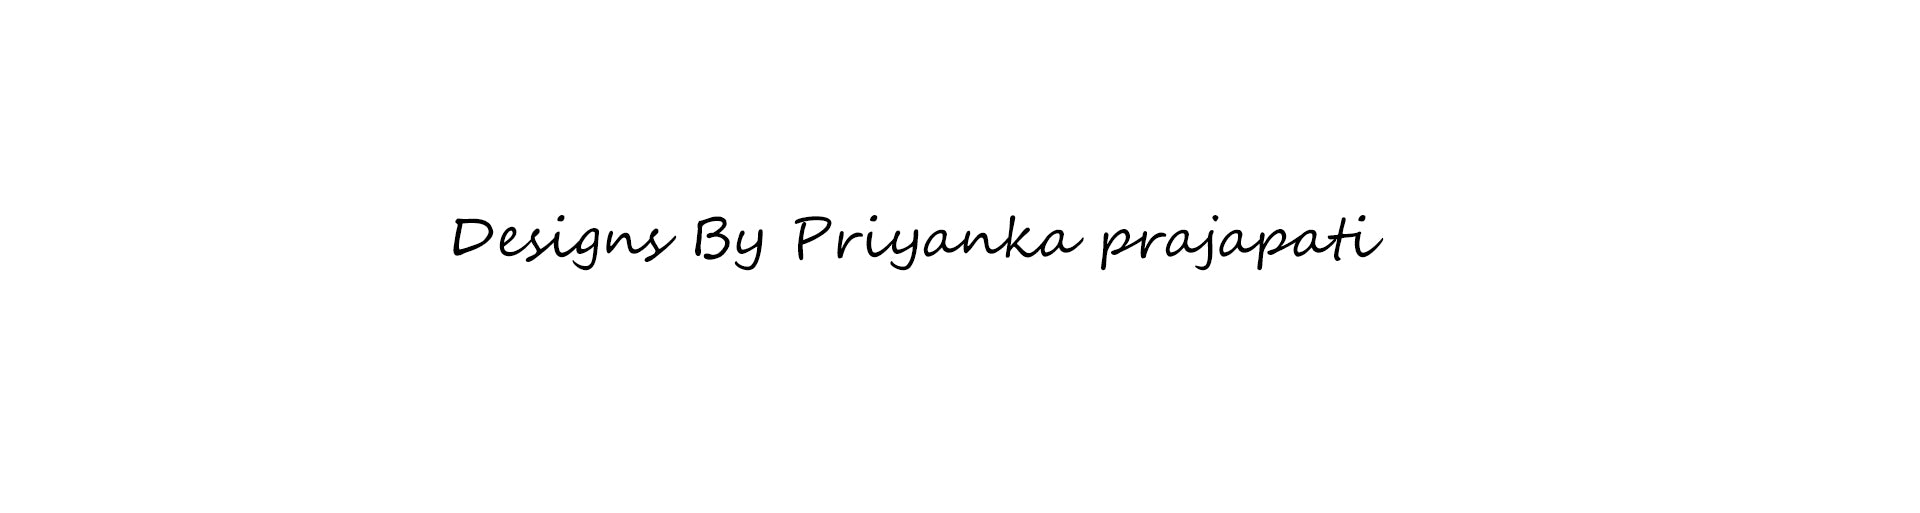 Priyanka prajapati